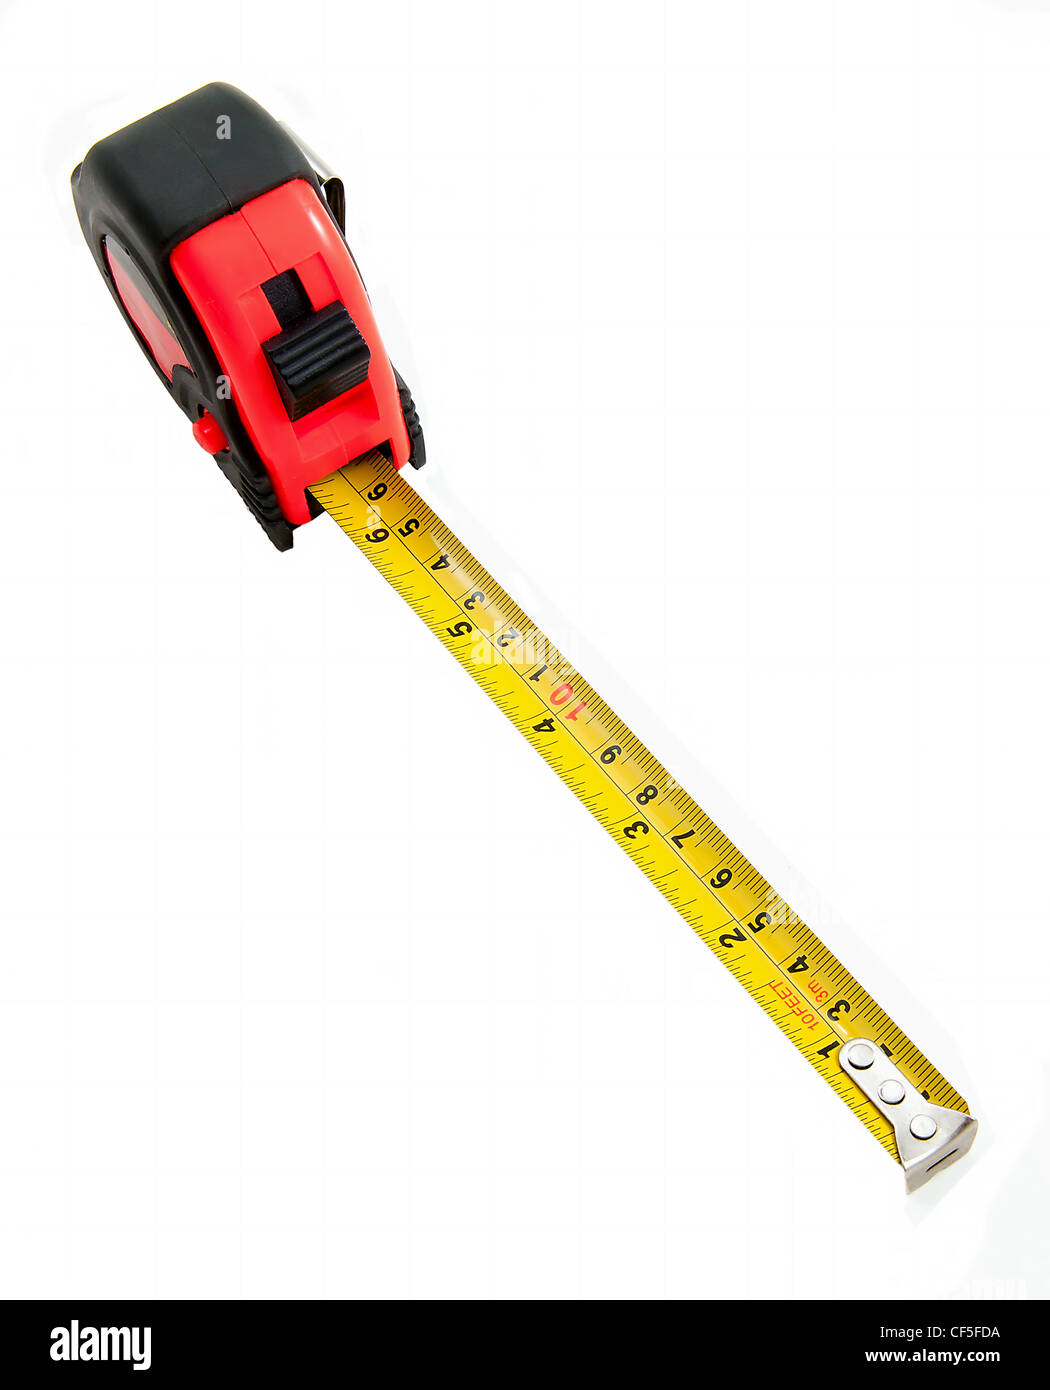 https://c8.alamy.com/comp/CF5FDA/red-tape-measure-with-yellow-ruler-on-white-CF5FDA.jpg